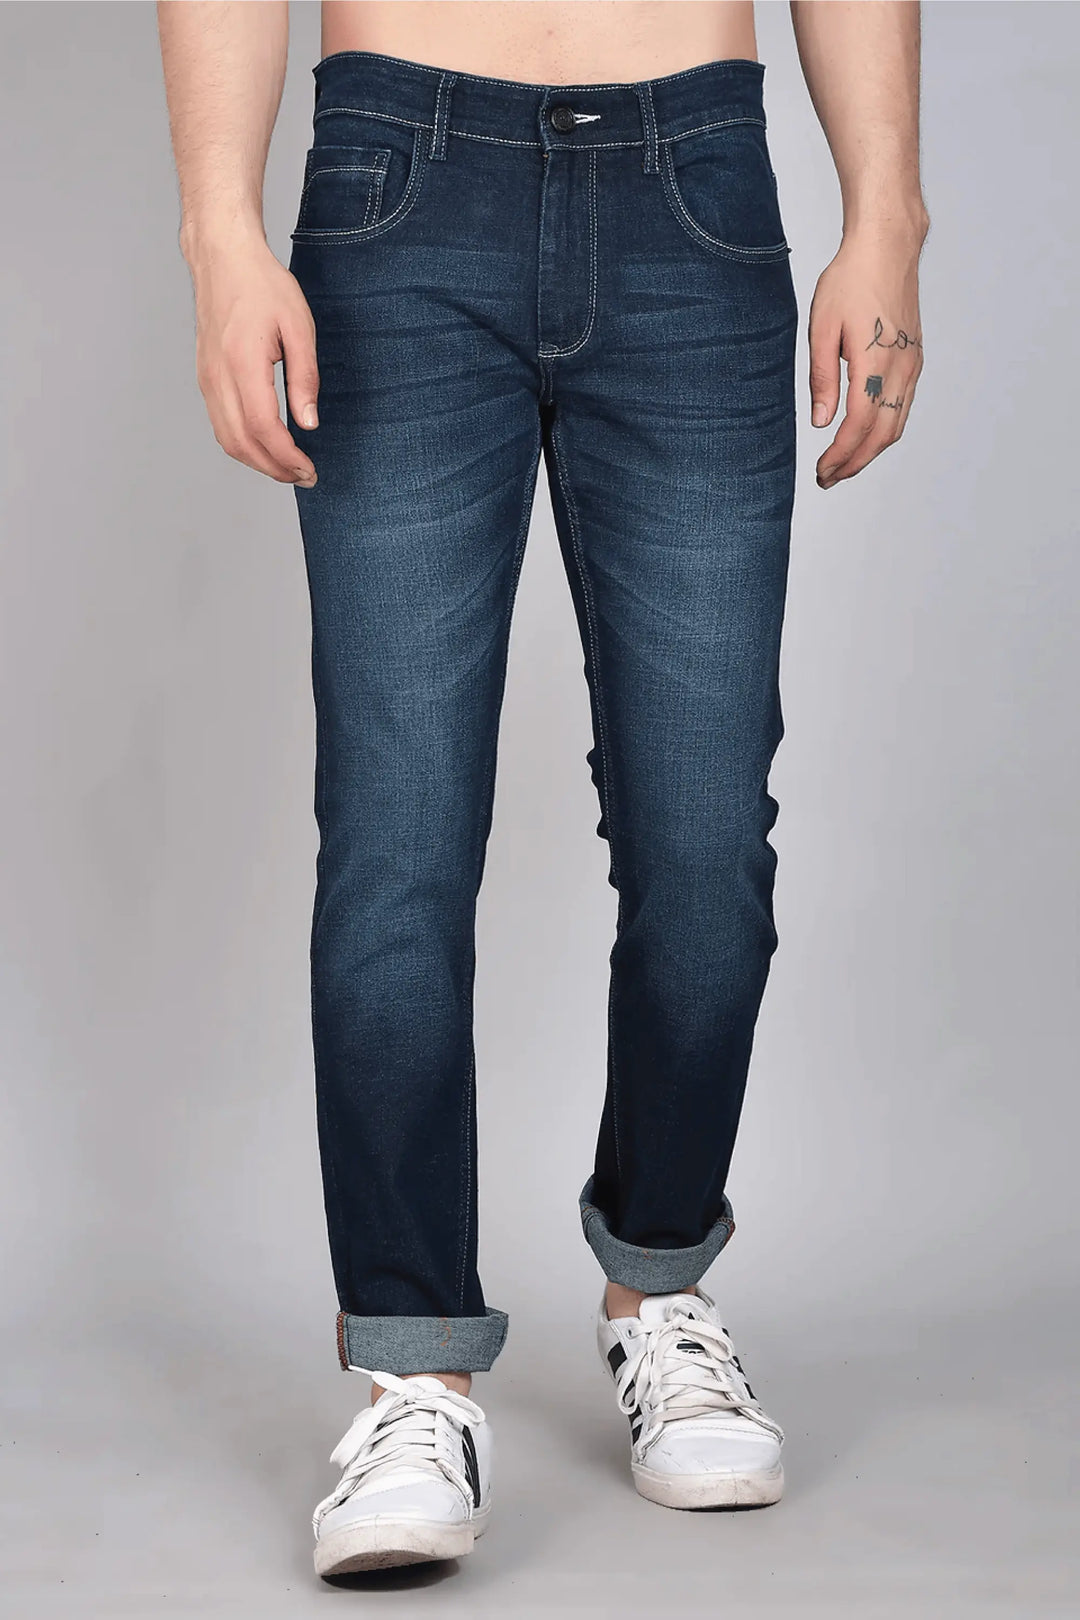 Slim Fit Blue with Green Tint Premium Men's Denim Jeans - Peplos Jeans 